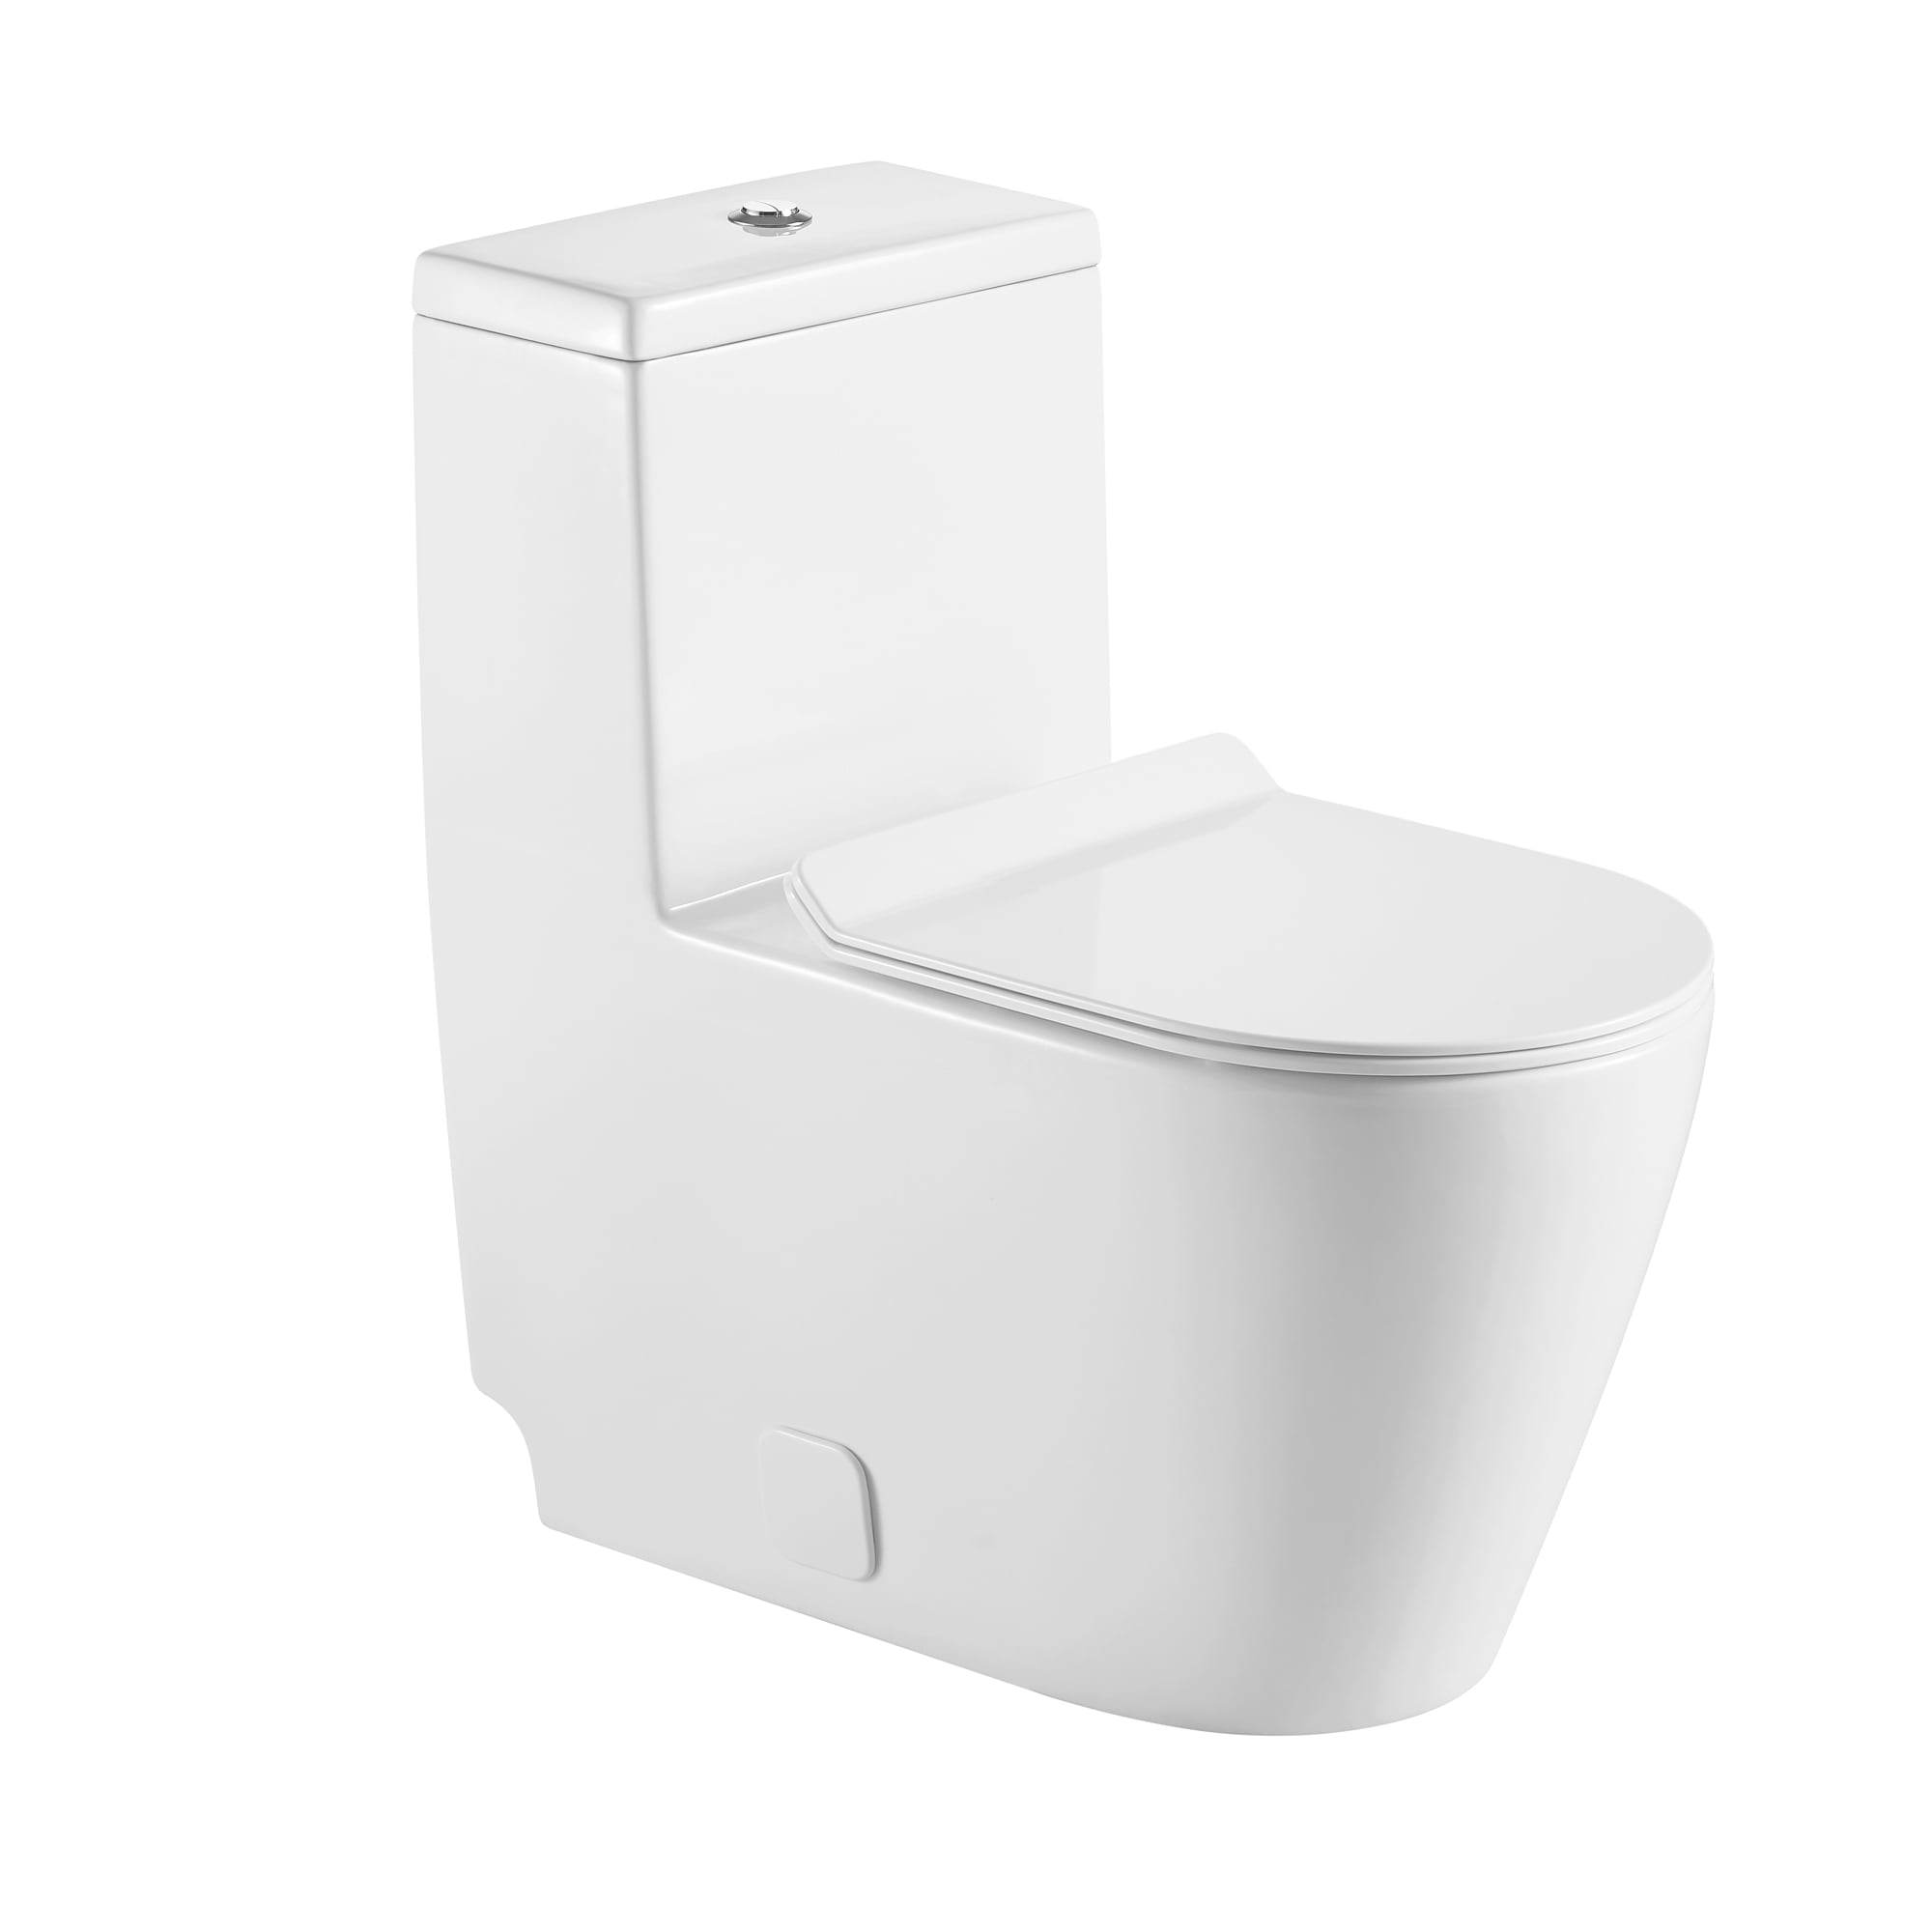 Eridanus ADA Compliant Toilets at Lowes.com